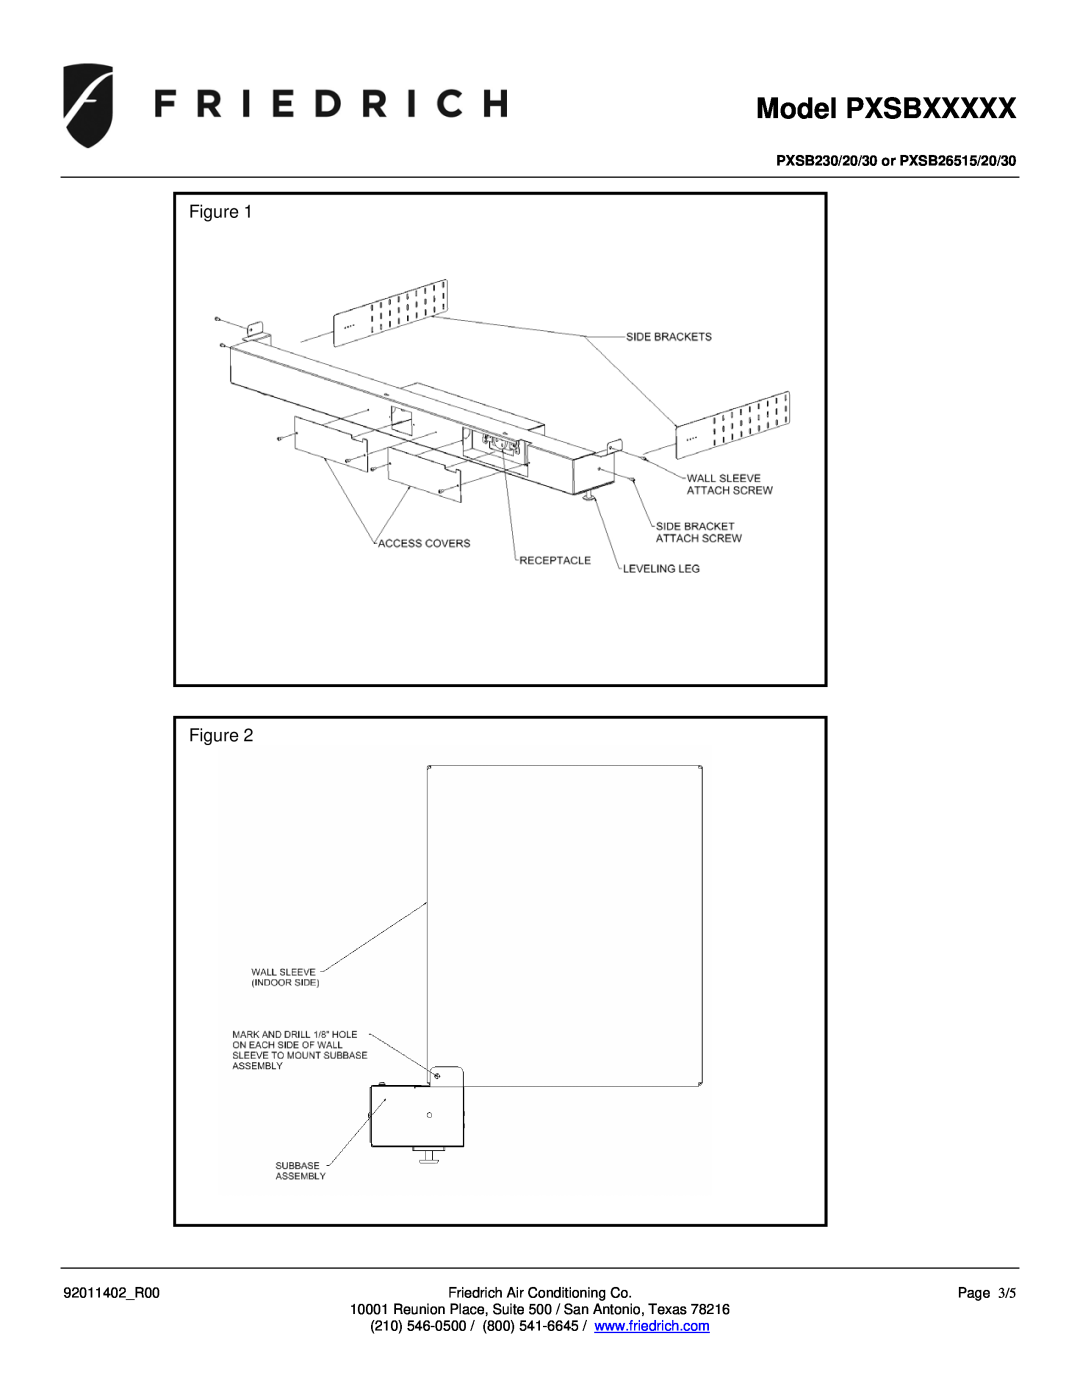 Friedrich installation instructions Model PXSBXXXXX, Figure Figure, PXSB230/20/30 or PXSB26515/20/30 